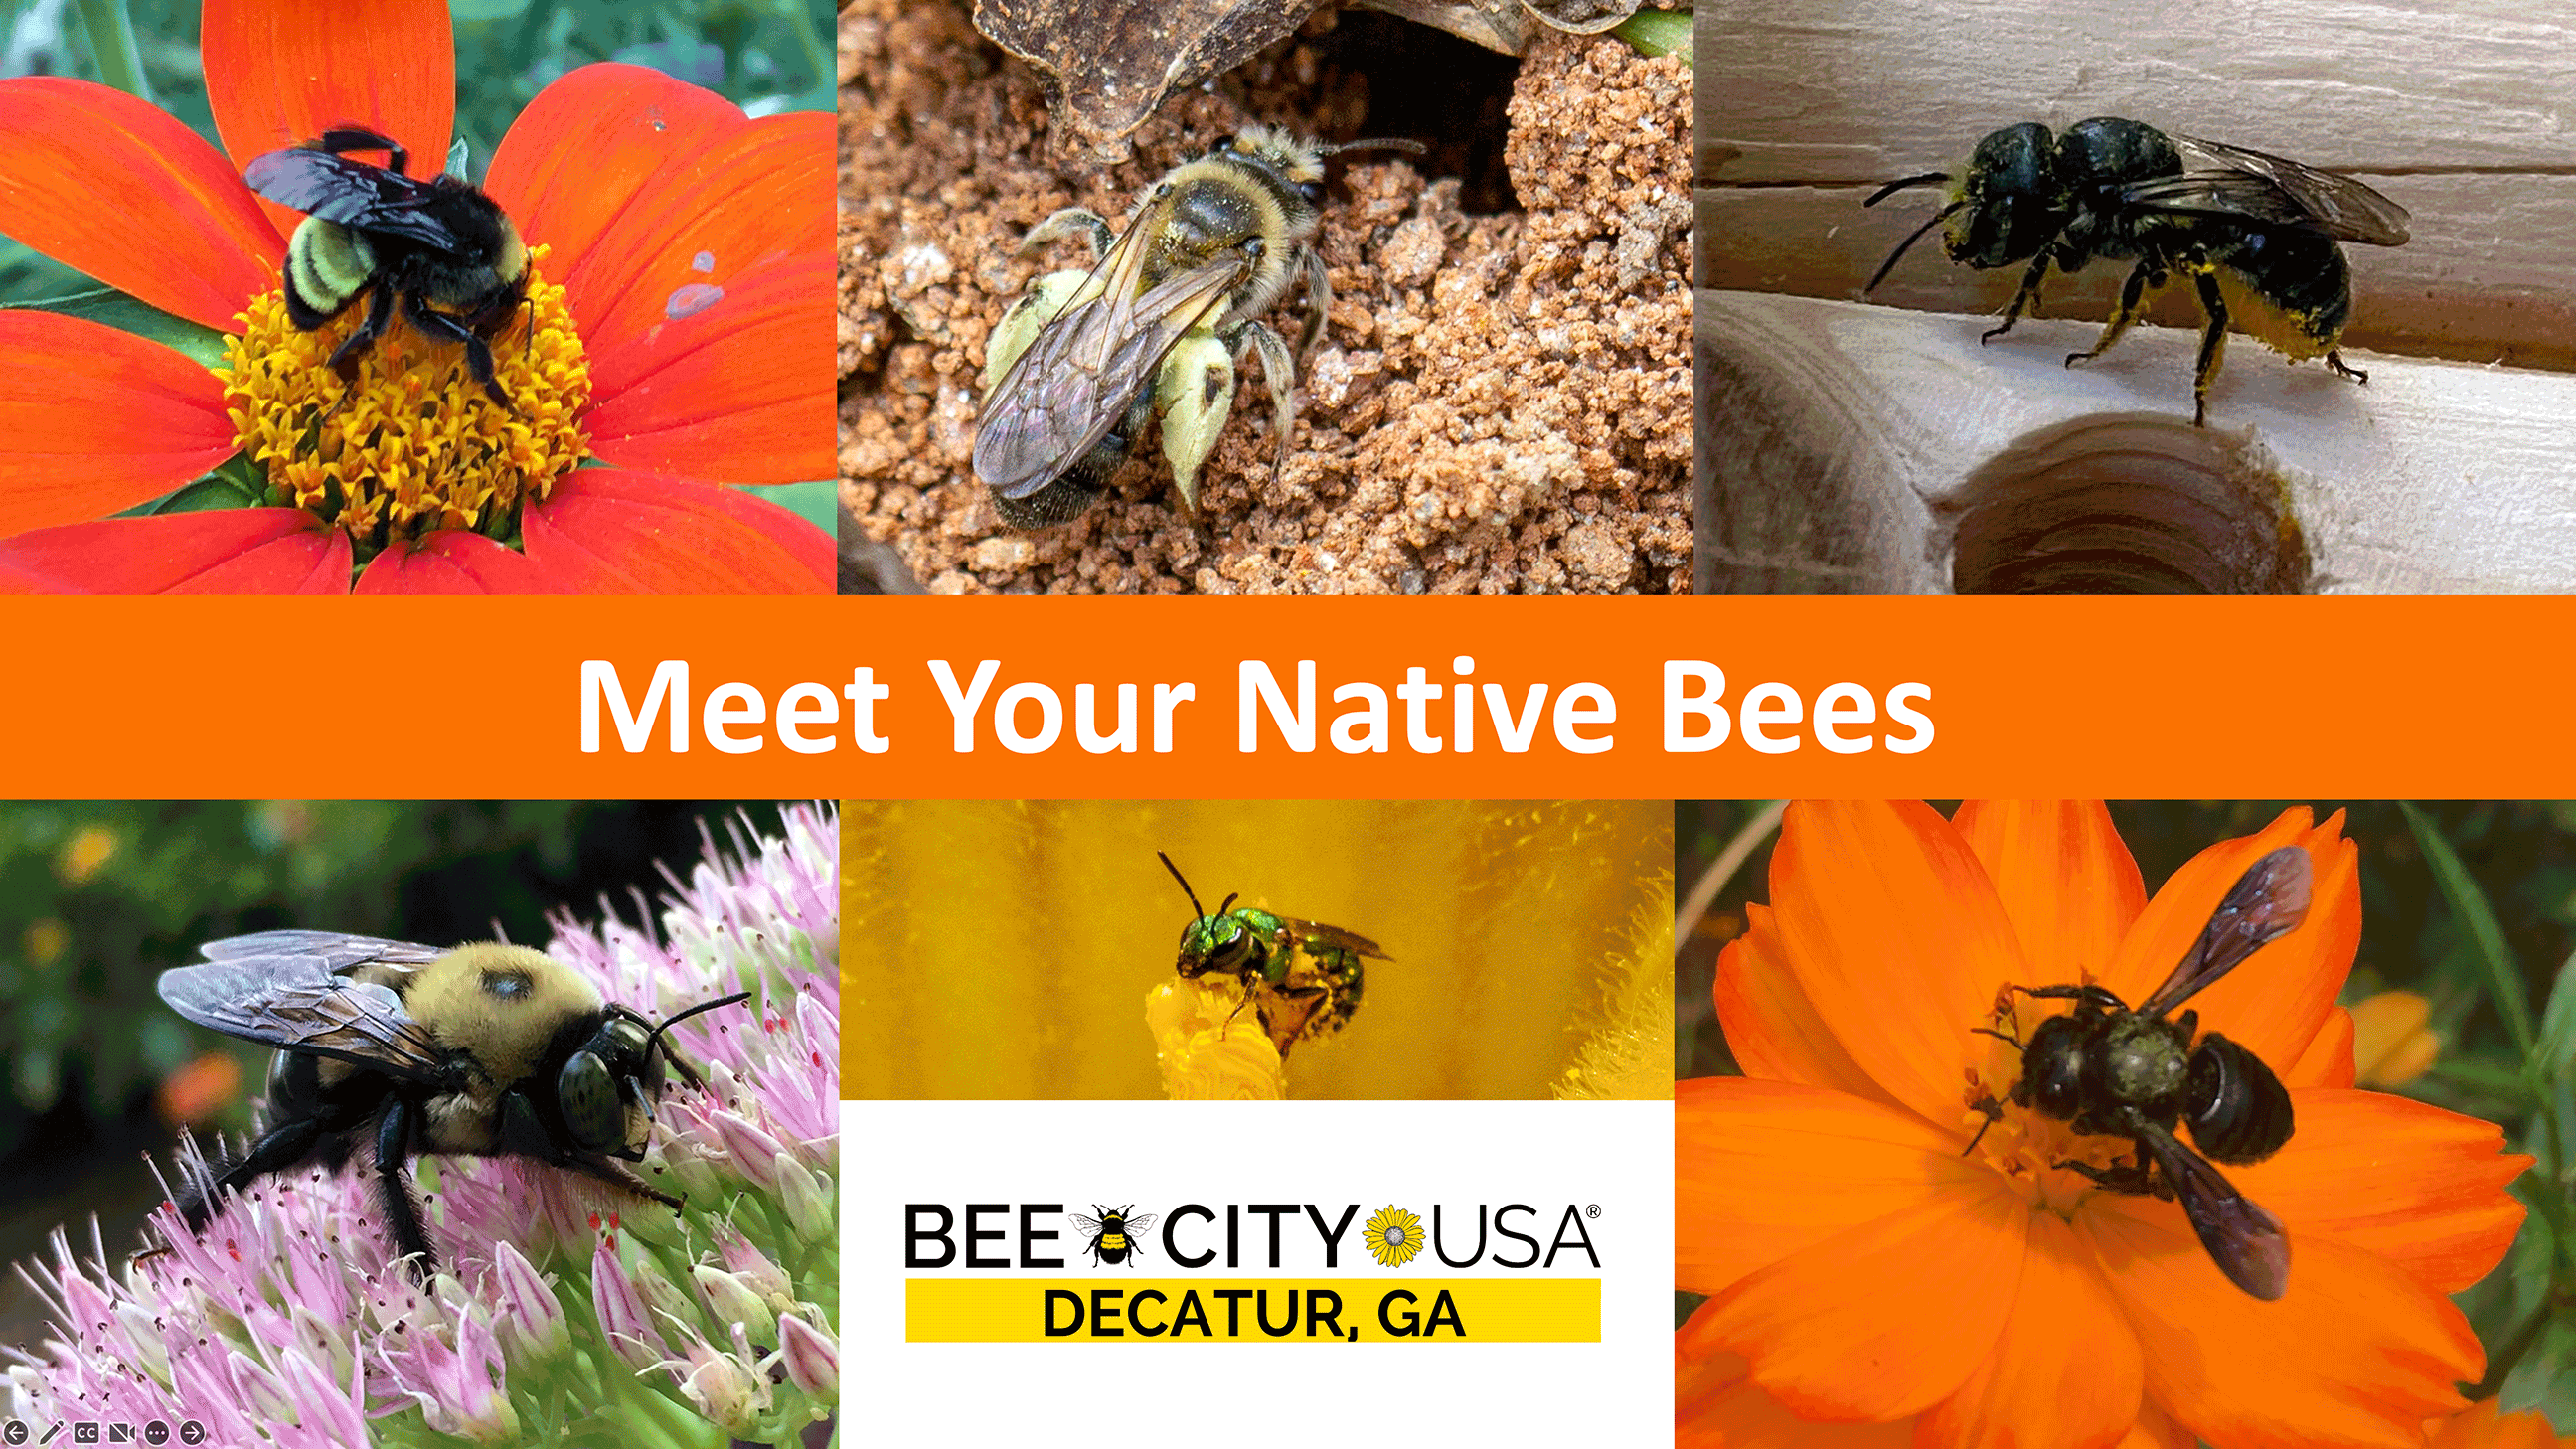 Meet your native bees, bee city USA, Decatur, GA